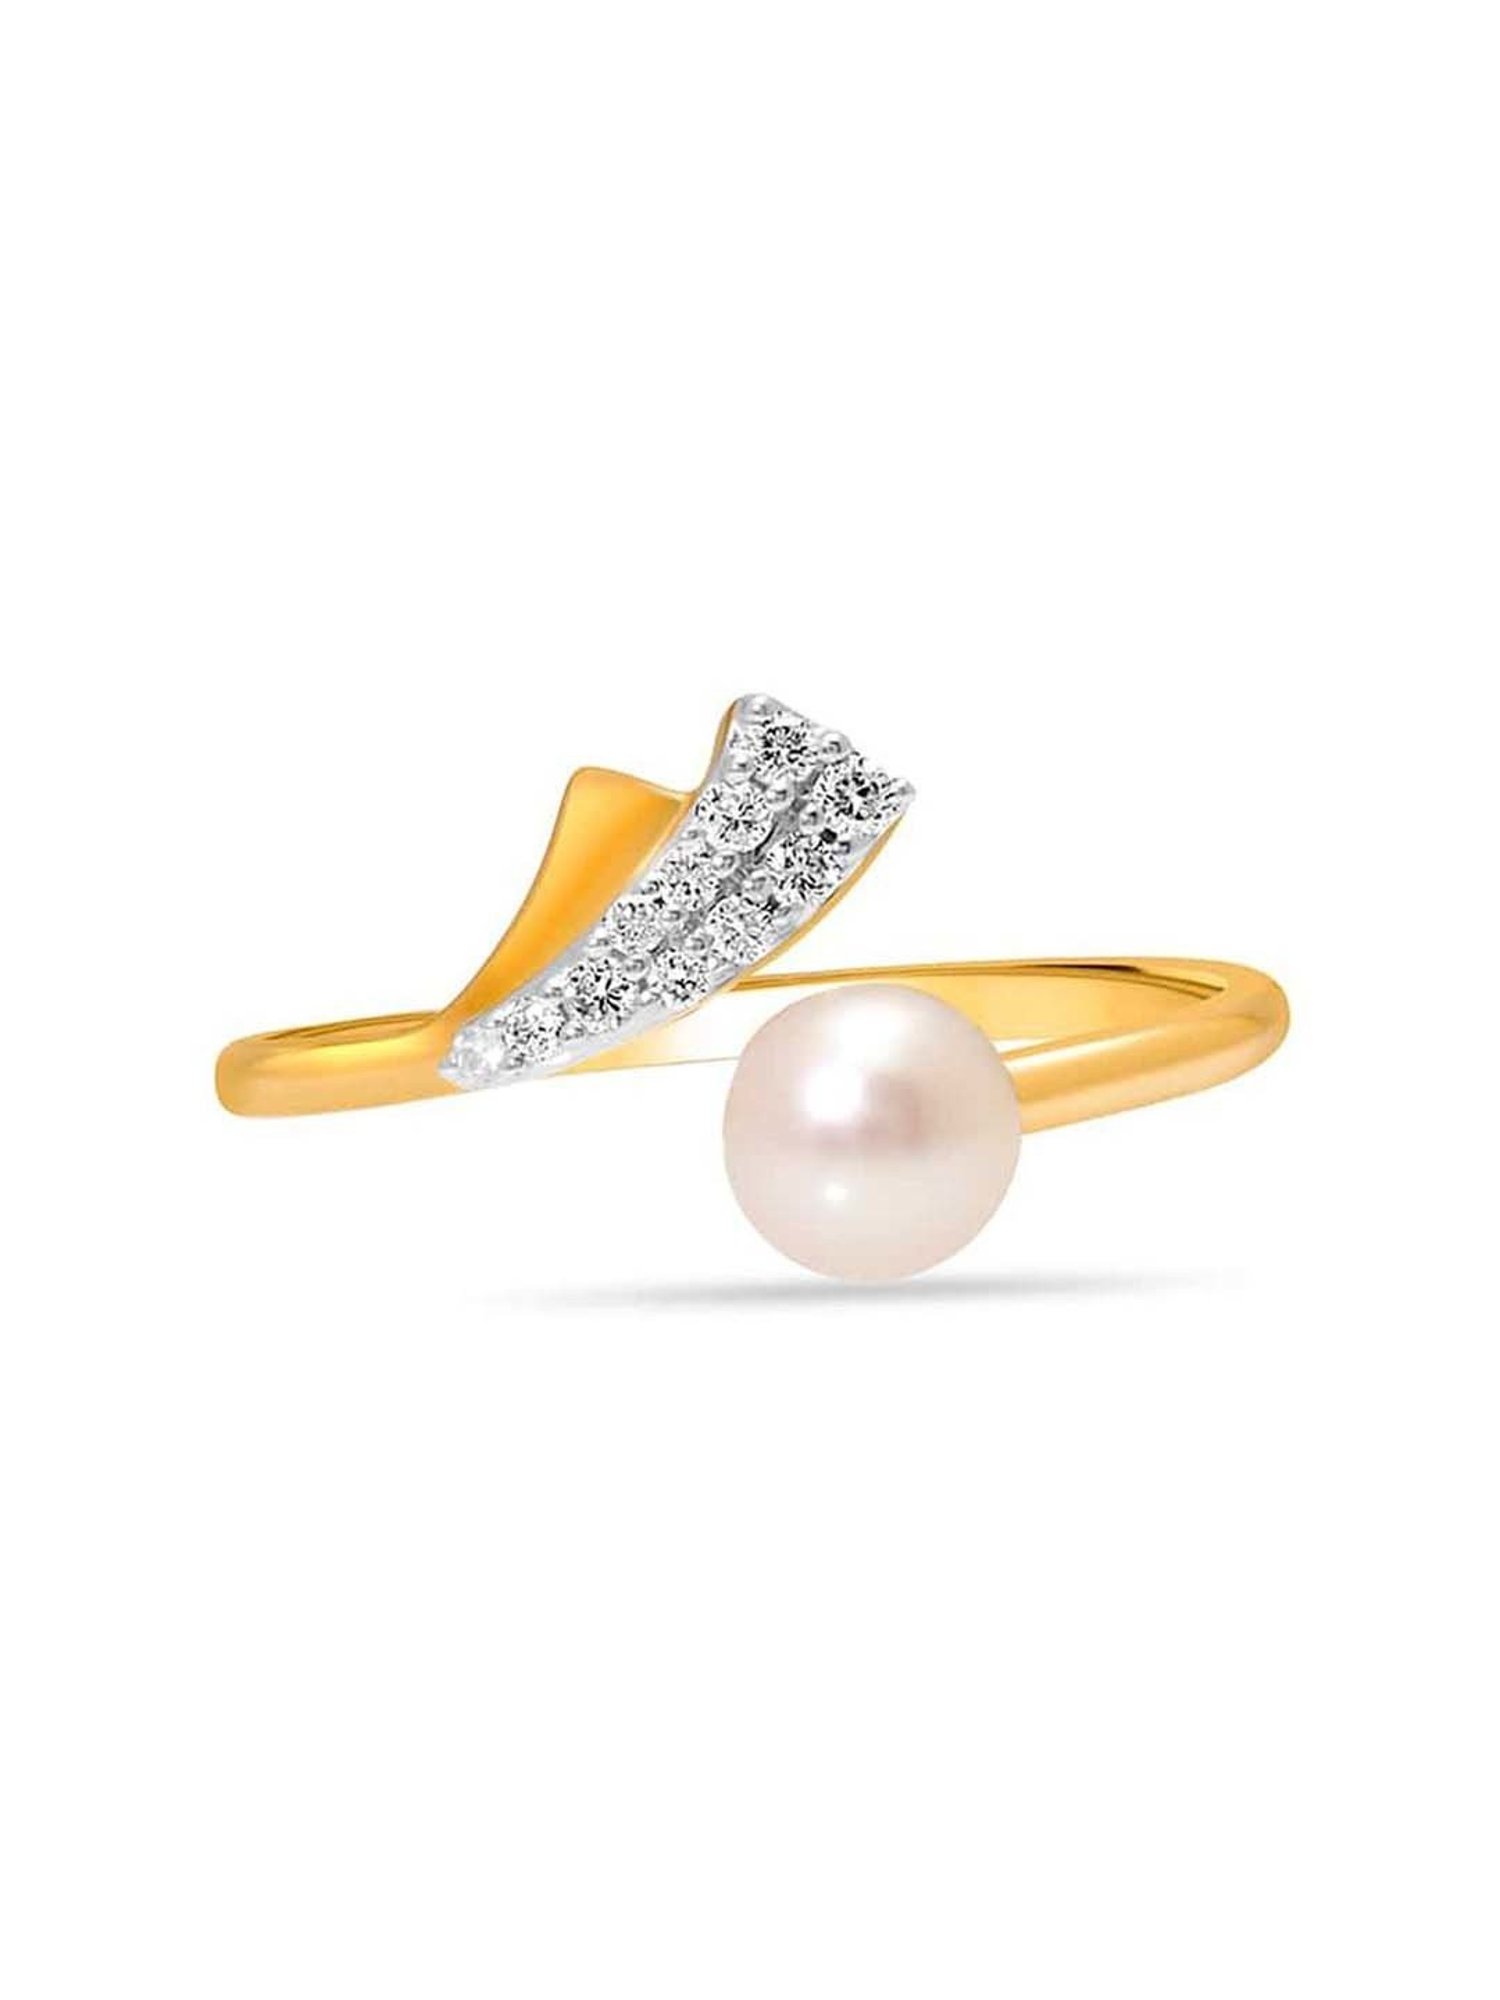 Tanishq Diamond Jewelry Rings and Pendants | About Fashion